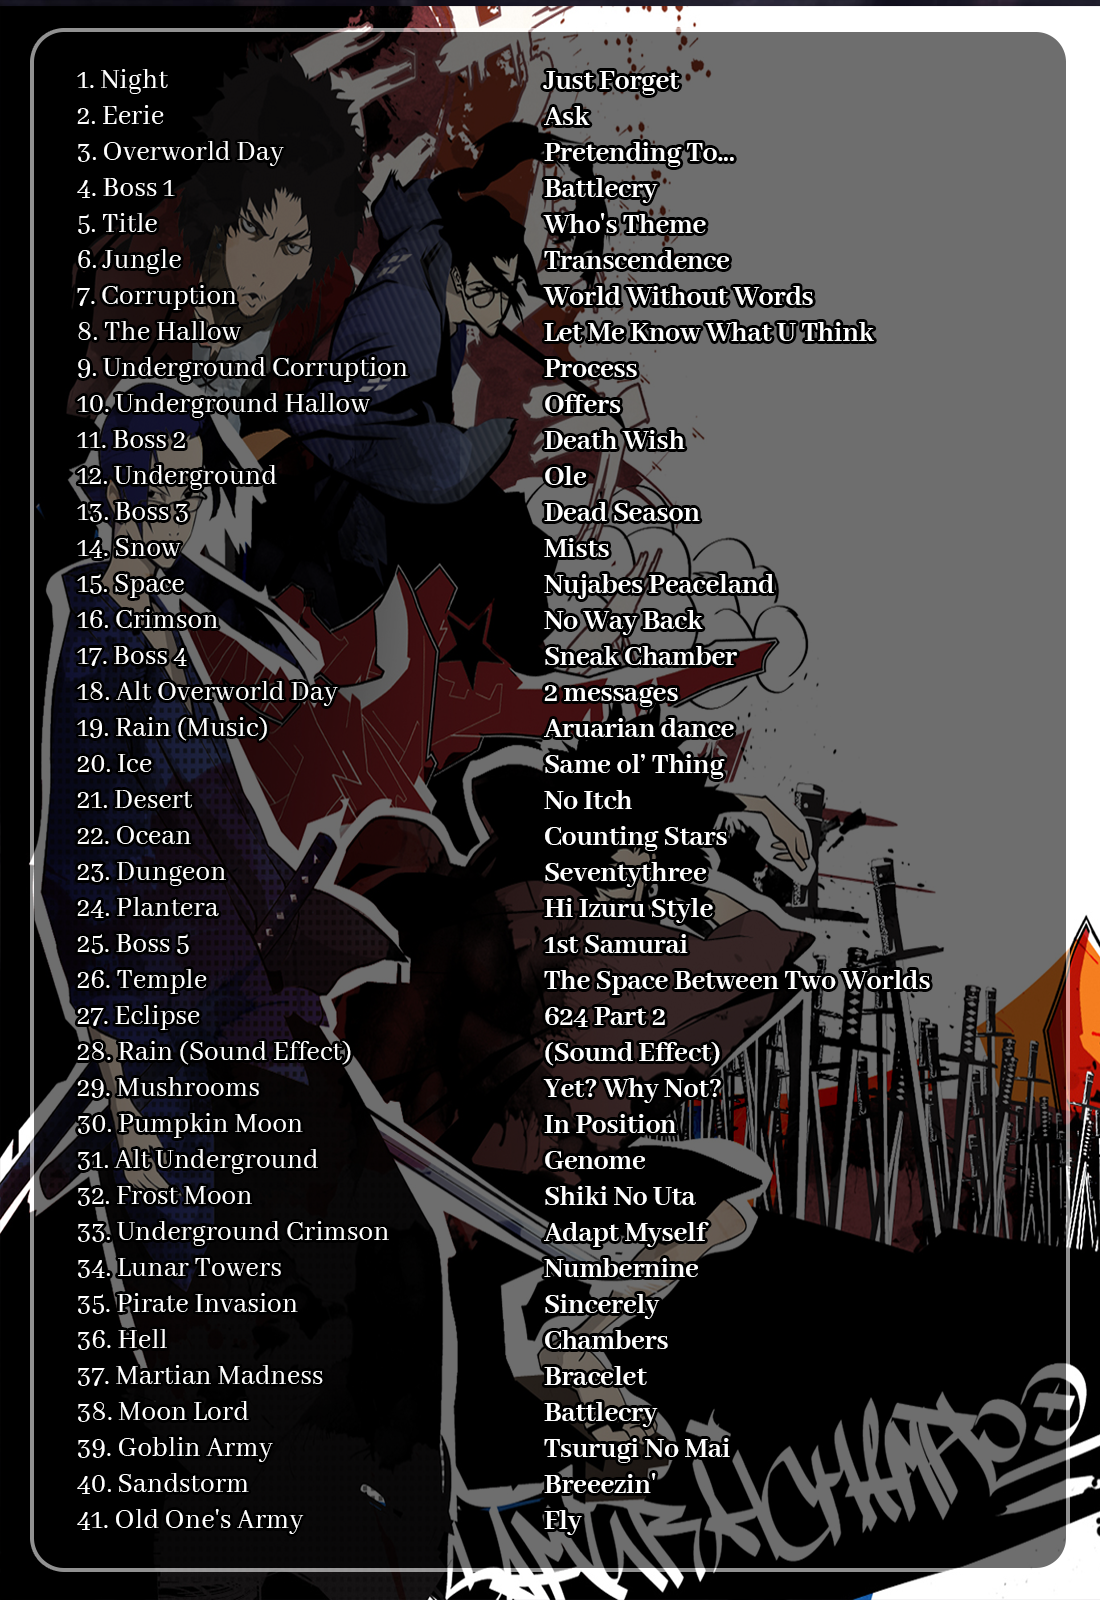 Samurai Champloo Tracklist.png